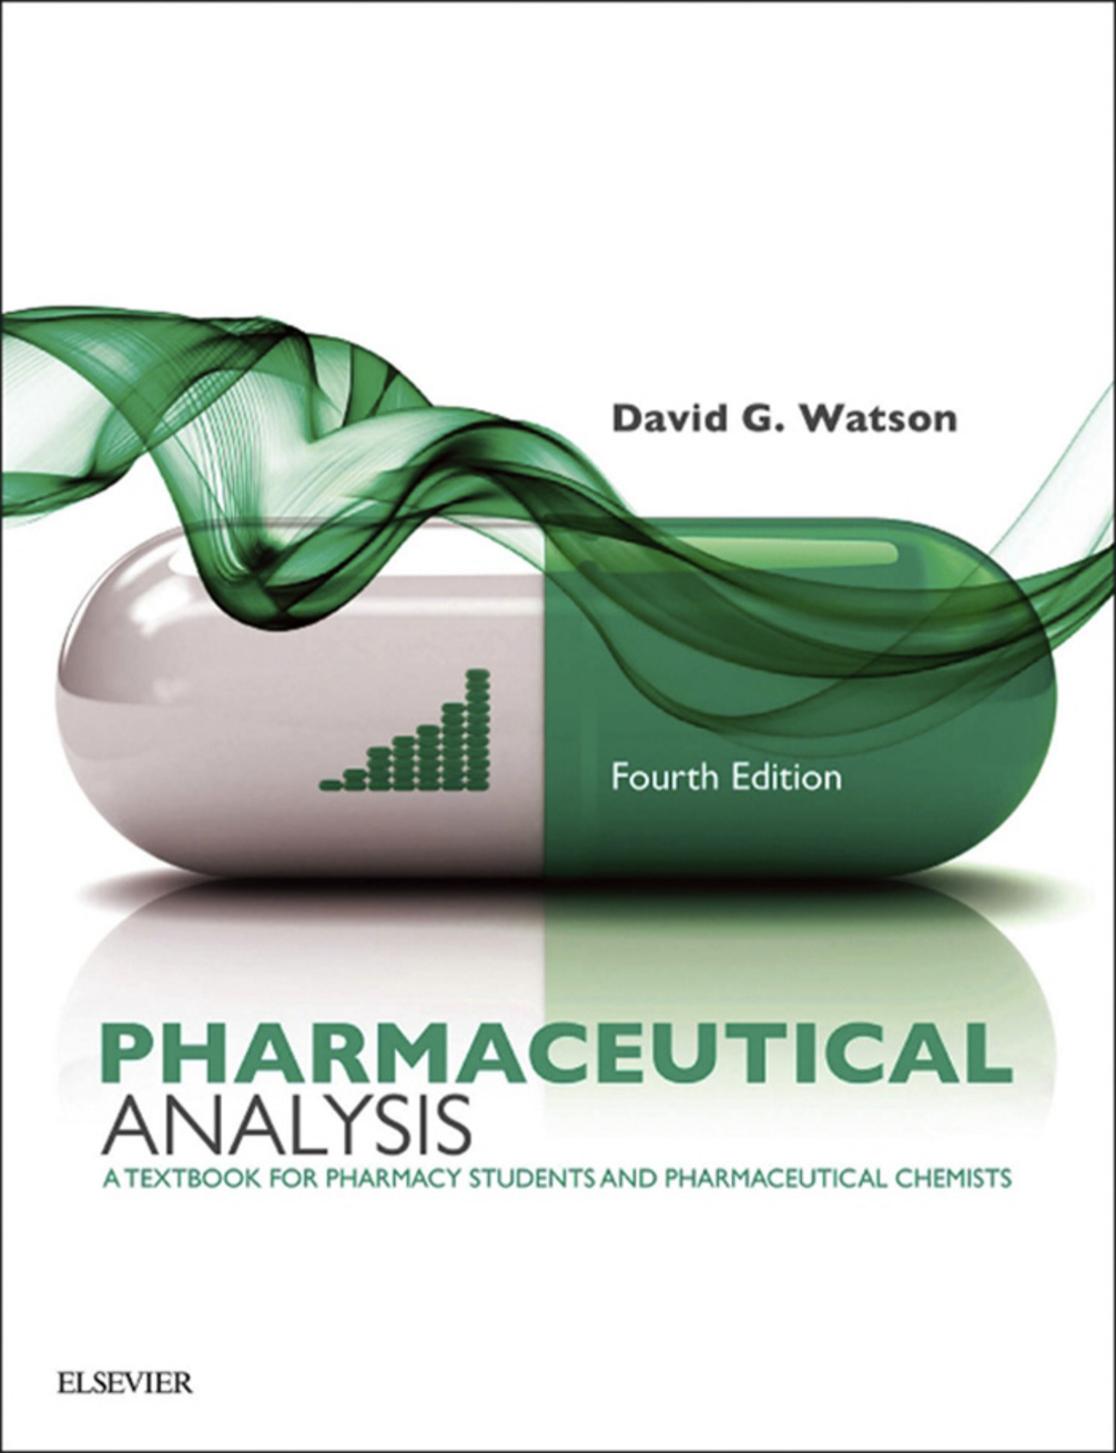 Pharmaceutical Analysis-1.jpg